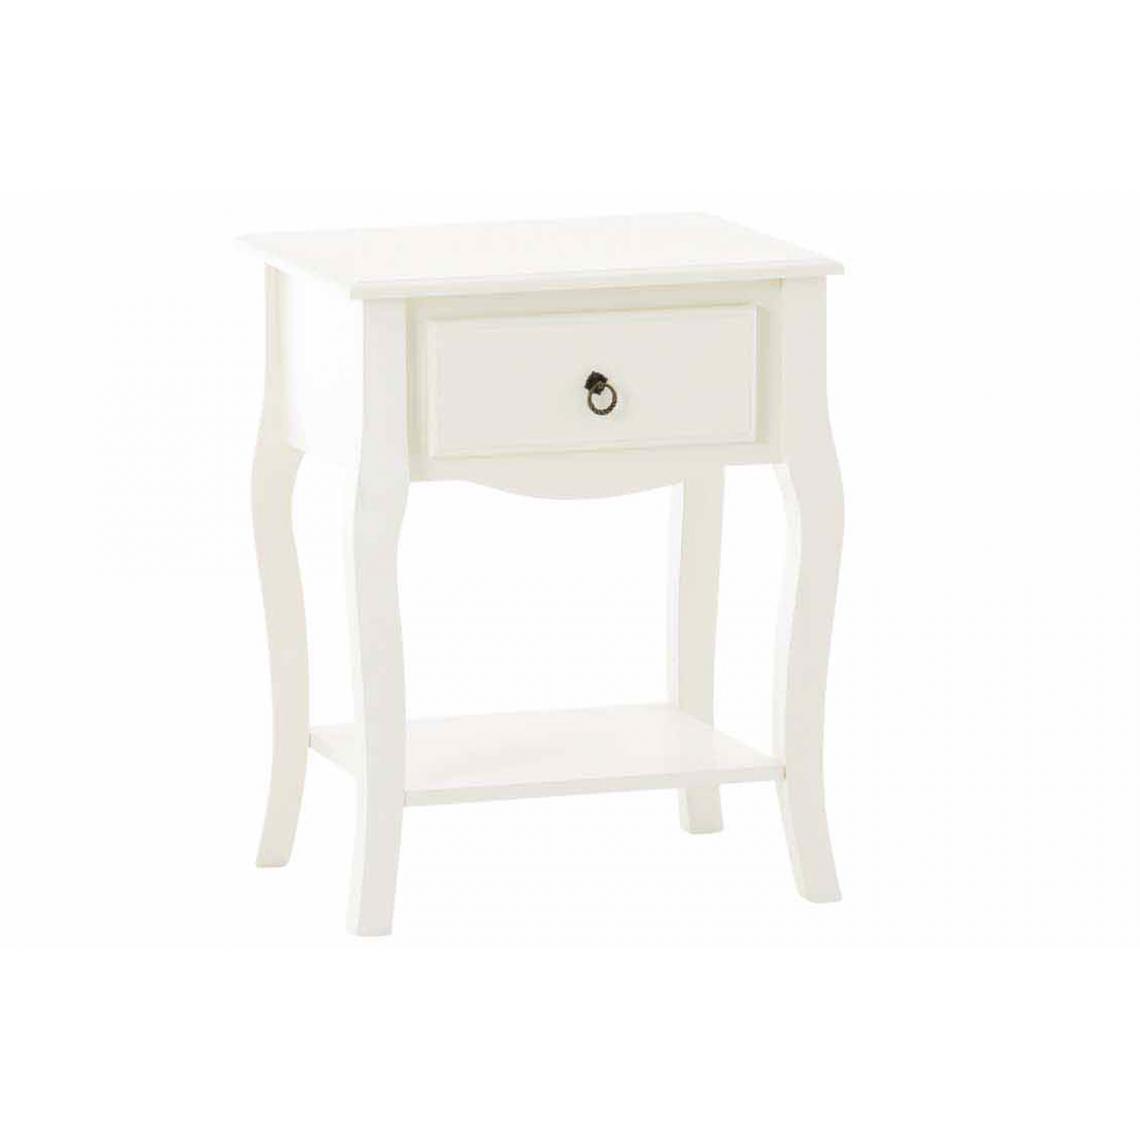 Icaverne - Stylé Table d'appoint reference Alofi couleur blanc - Chaises